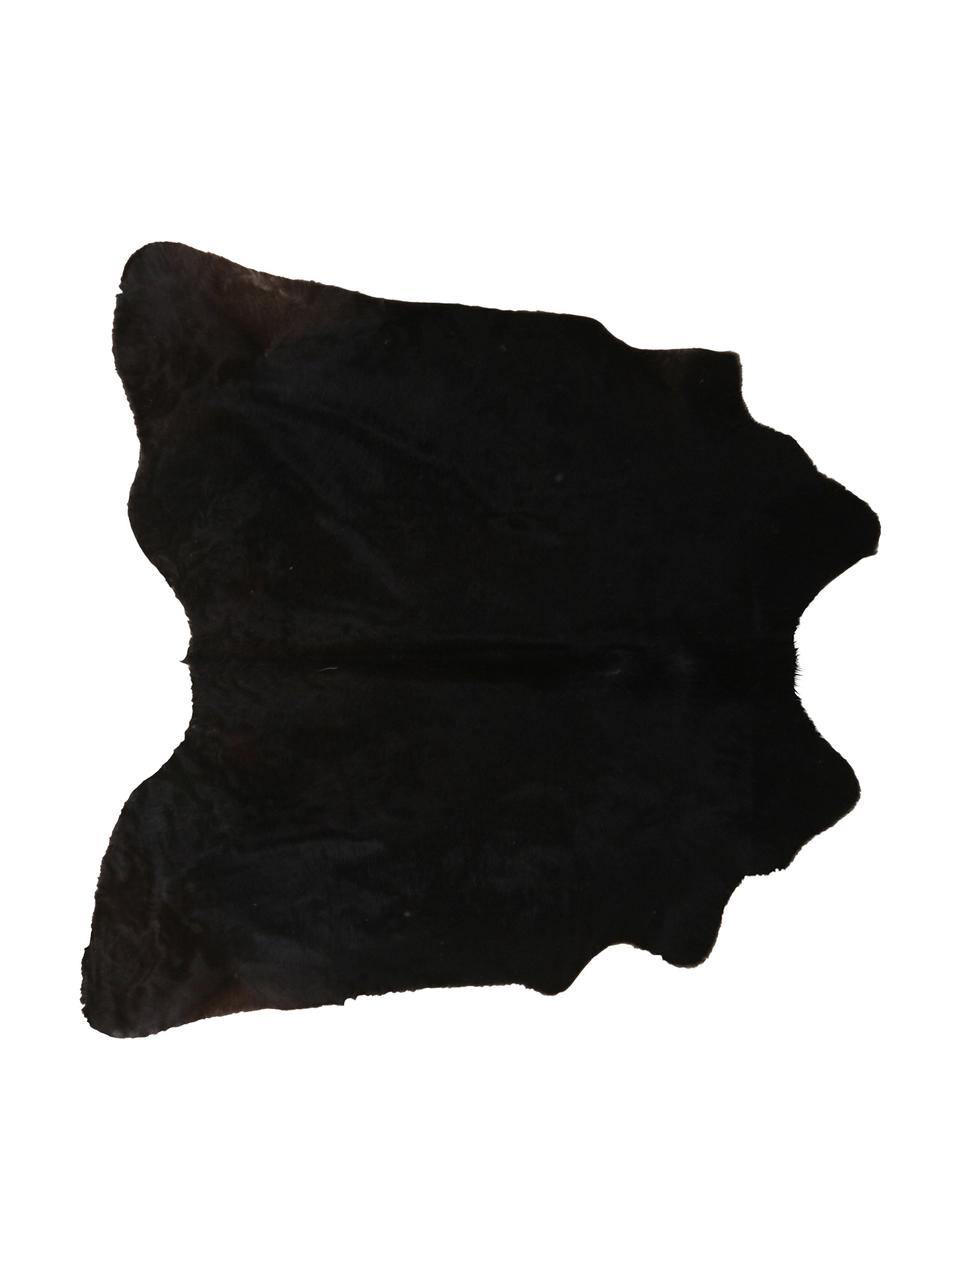 Tappeto in pelle di mucca Lana, Pelle bovina, Nero, Larg. 180 x Lung. 200 cm